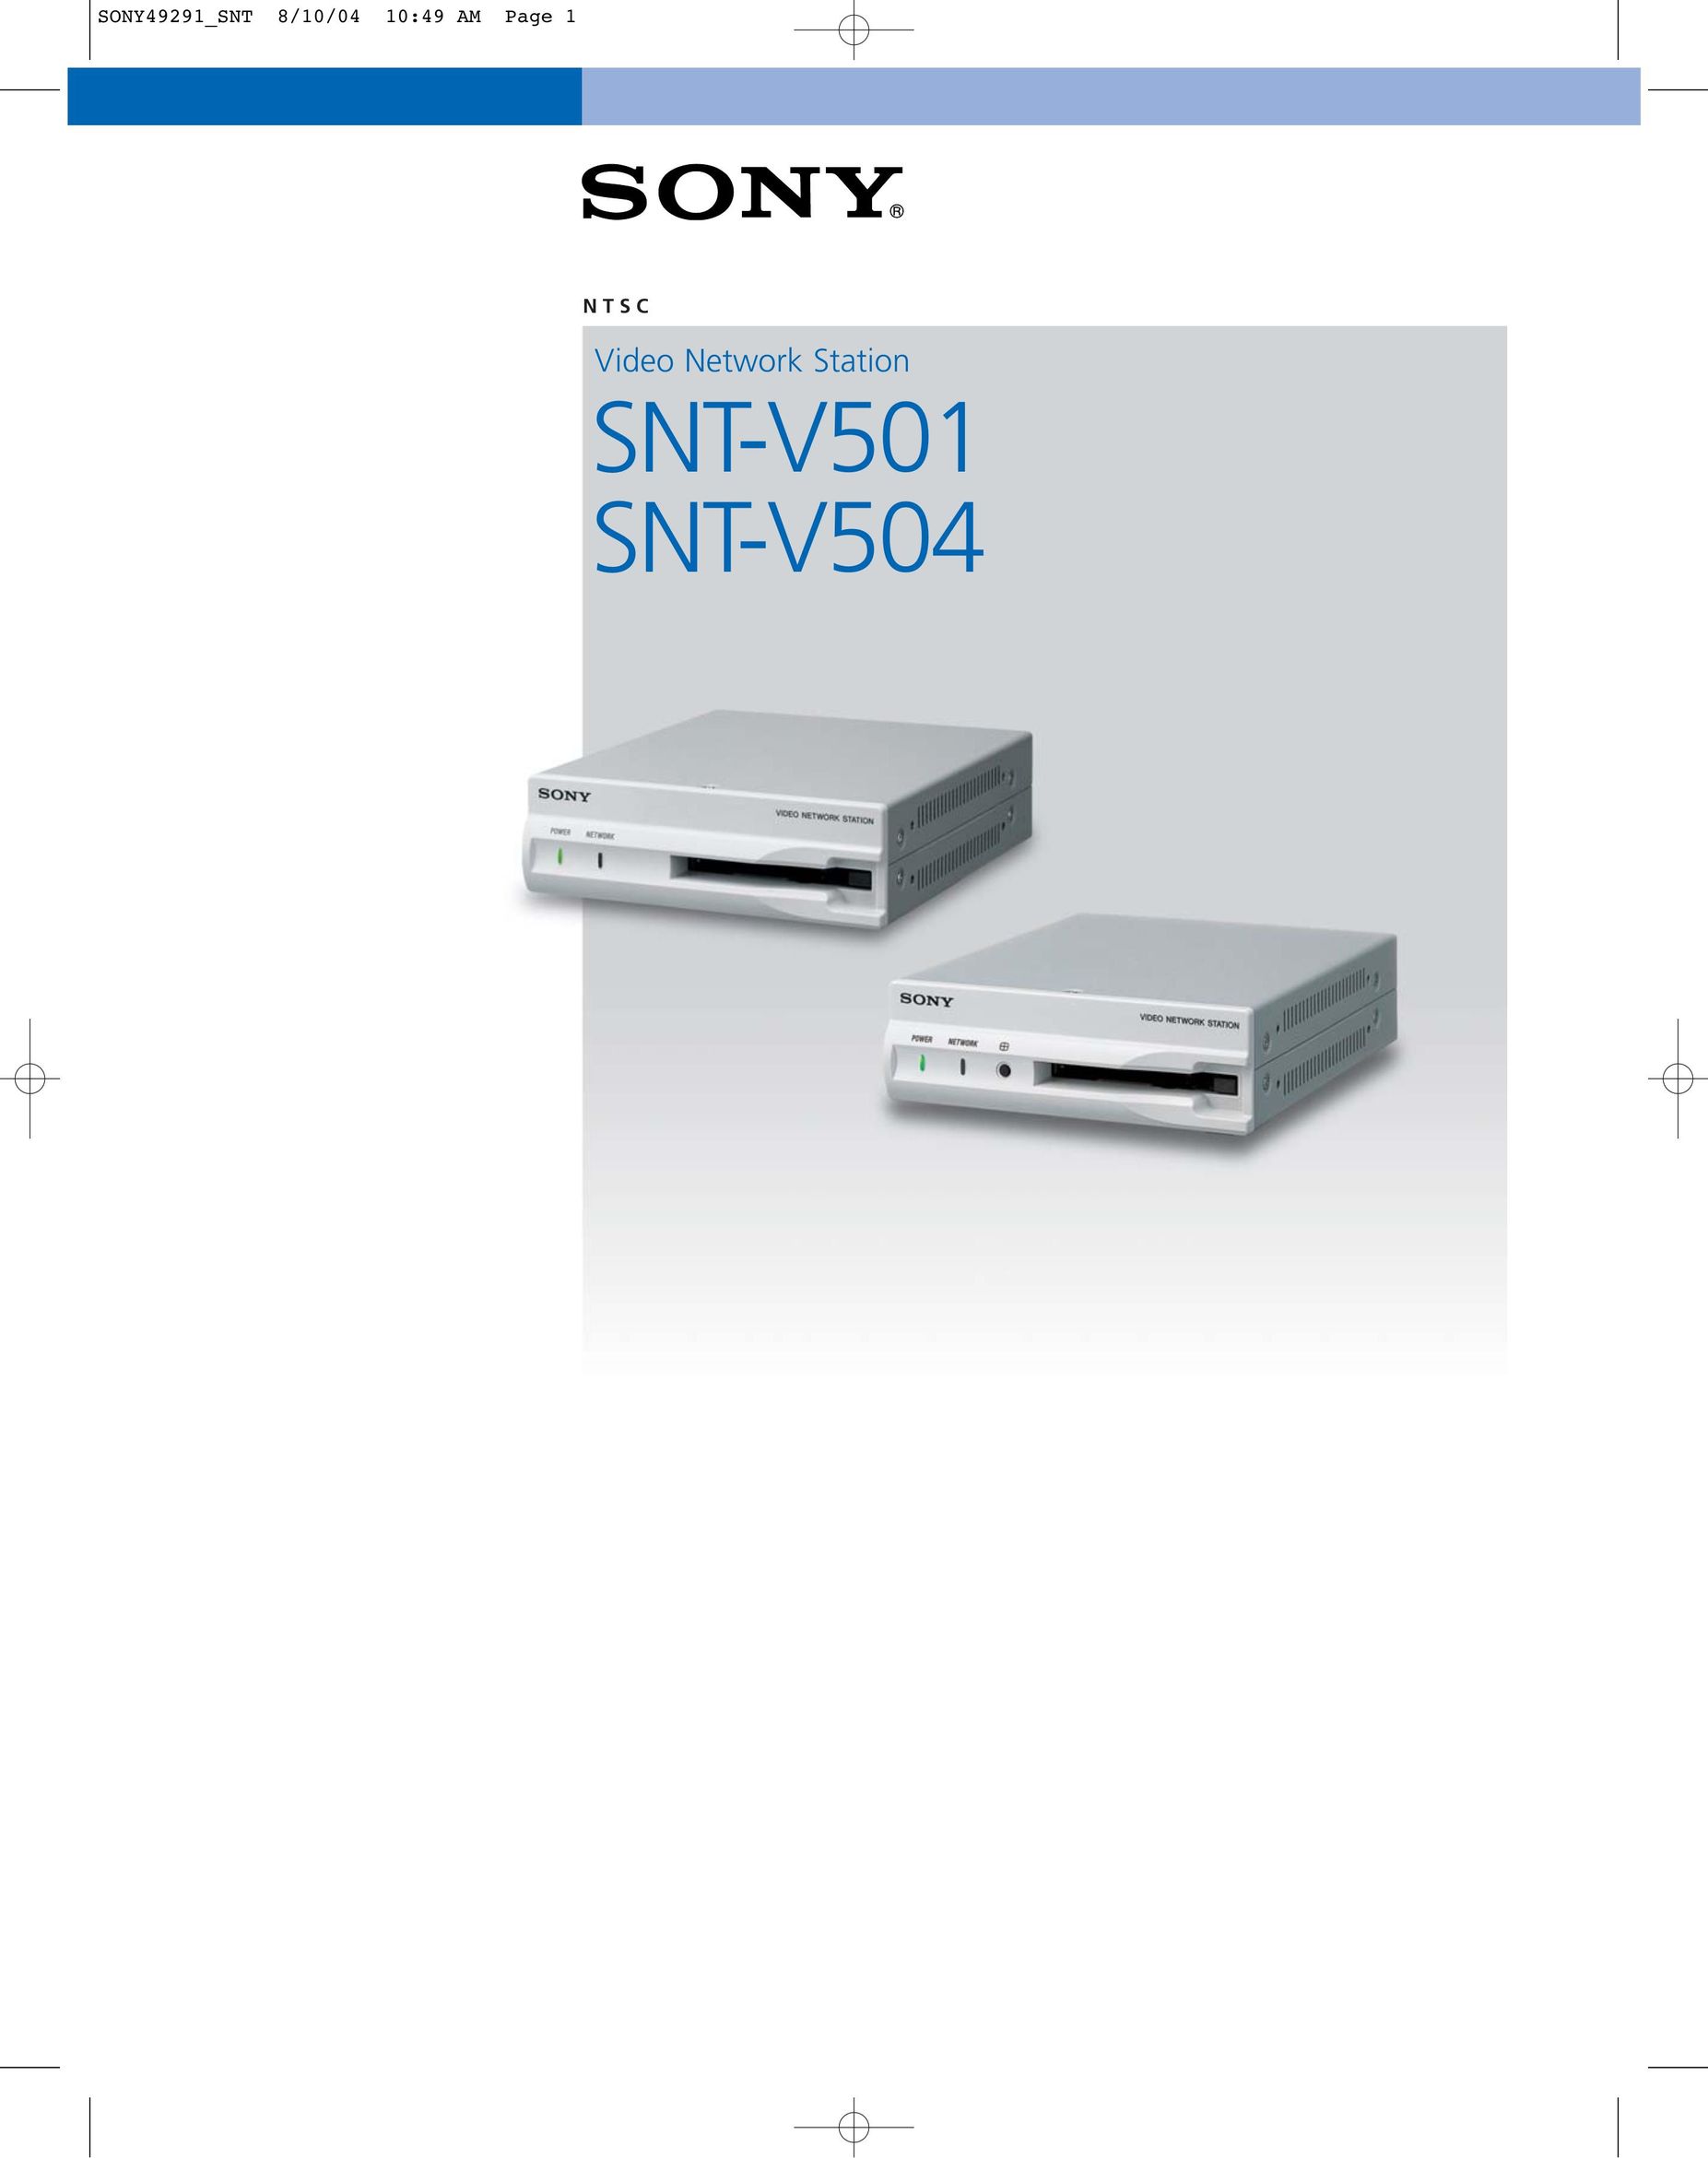 Nikon SNT-V501 Network Card User Manual